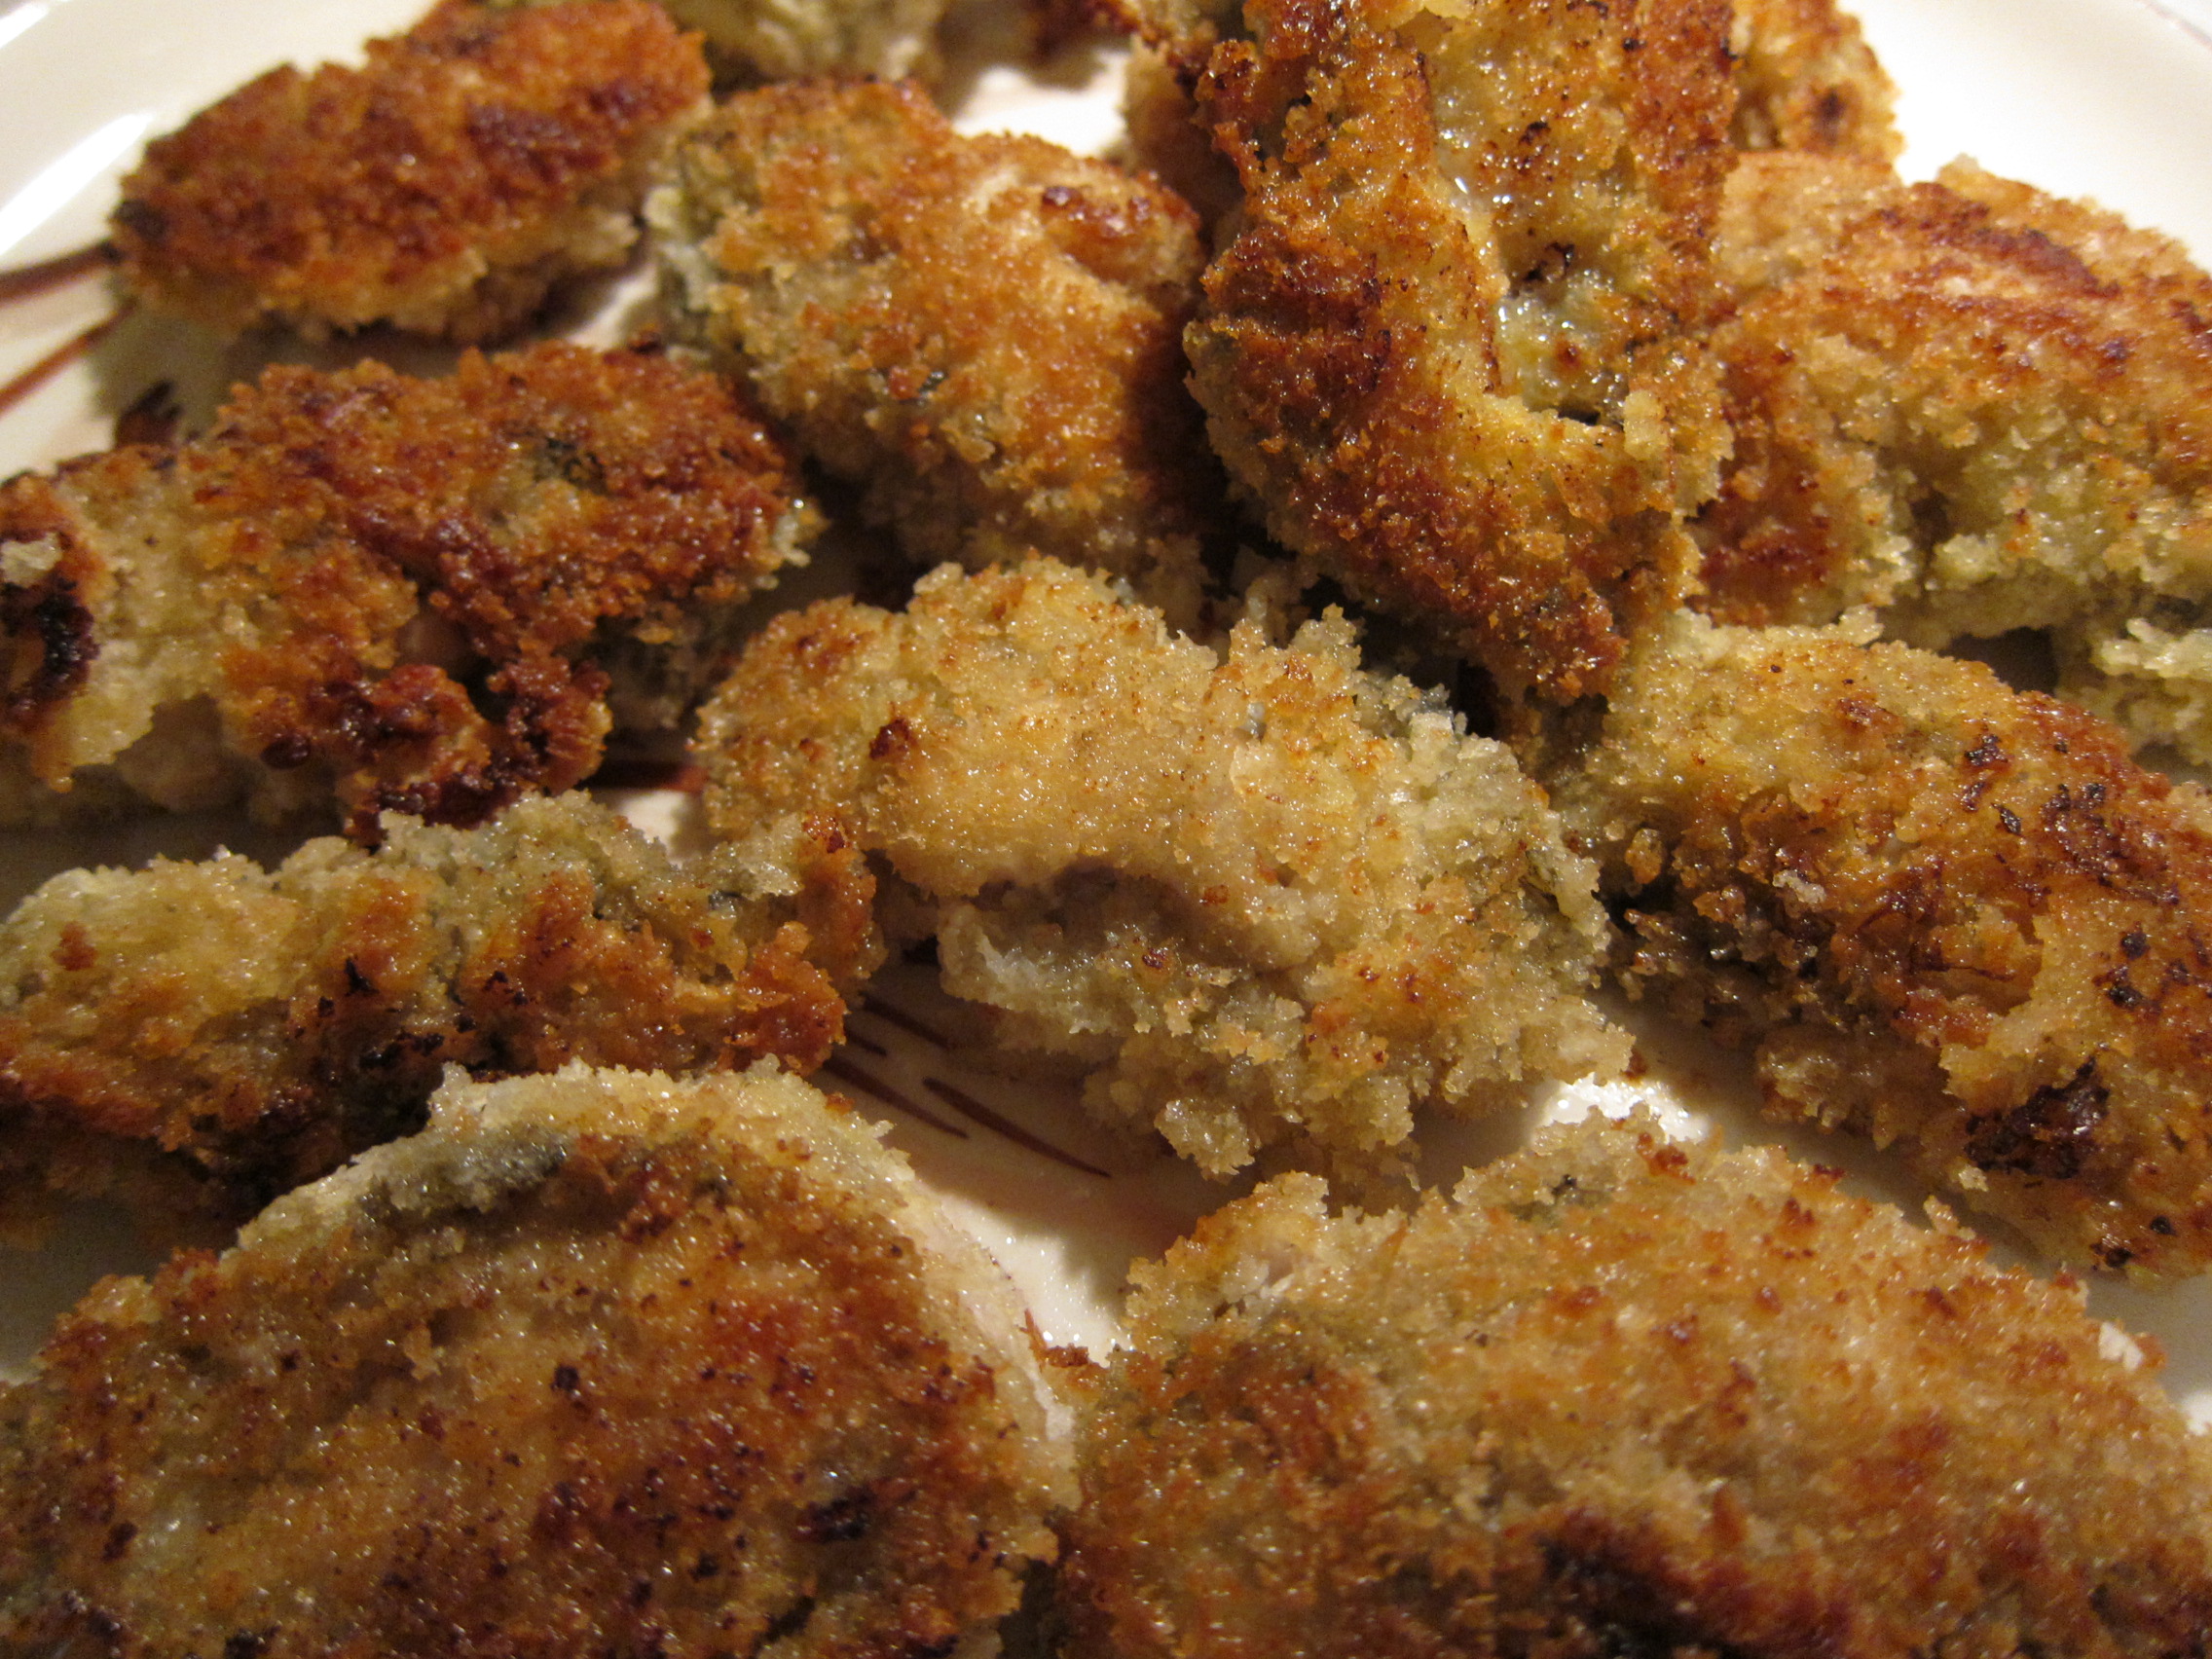 https://photos.bigoven.com/recipe/hero/panfried-oysters.jpg